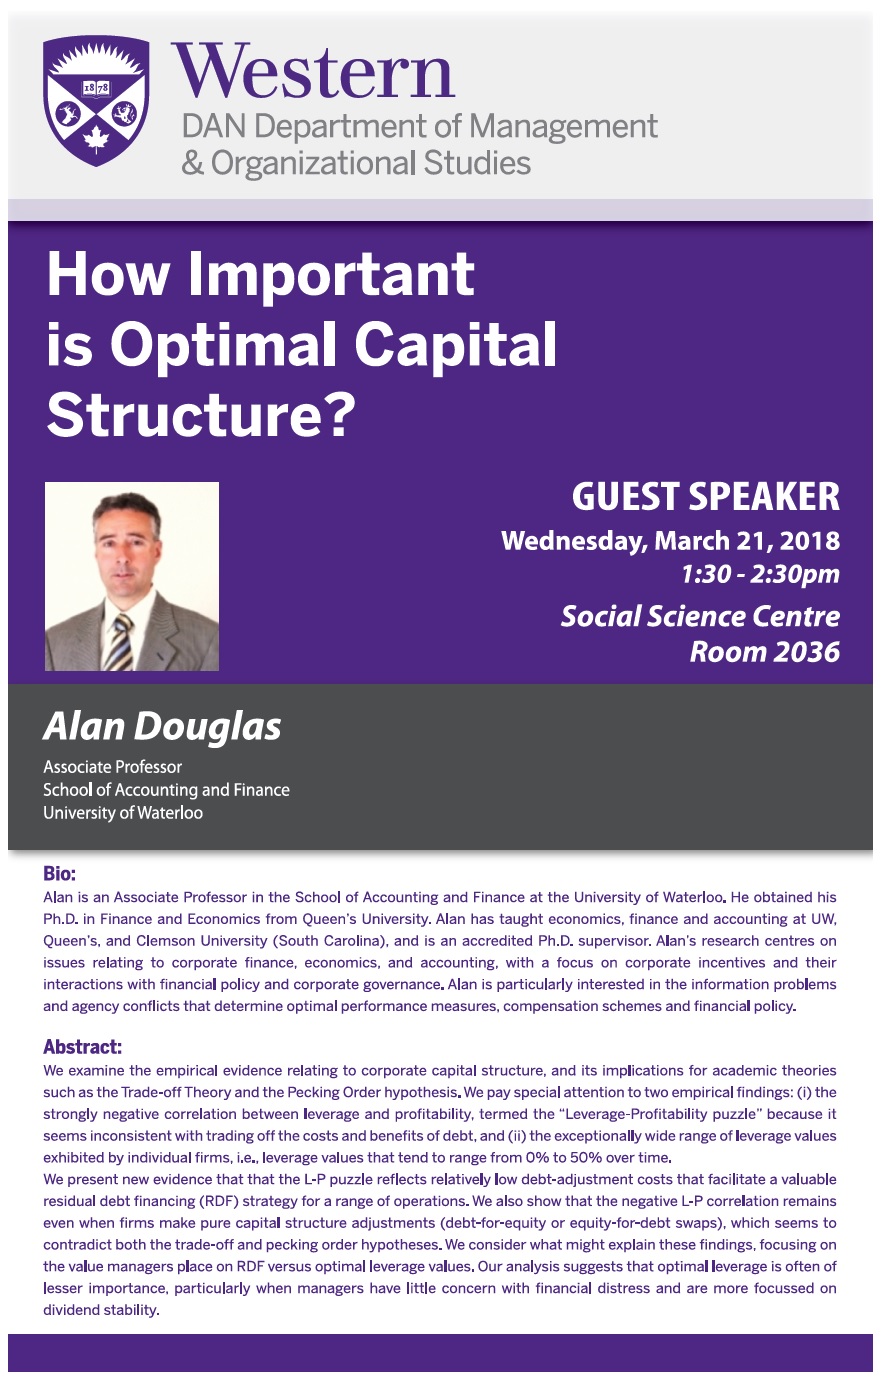 Alan Douglas, Guest Speaker March 21 at 1:30